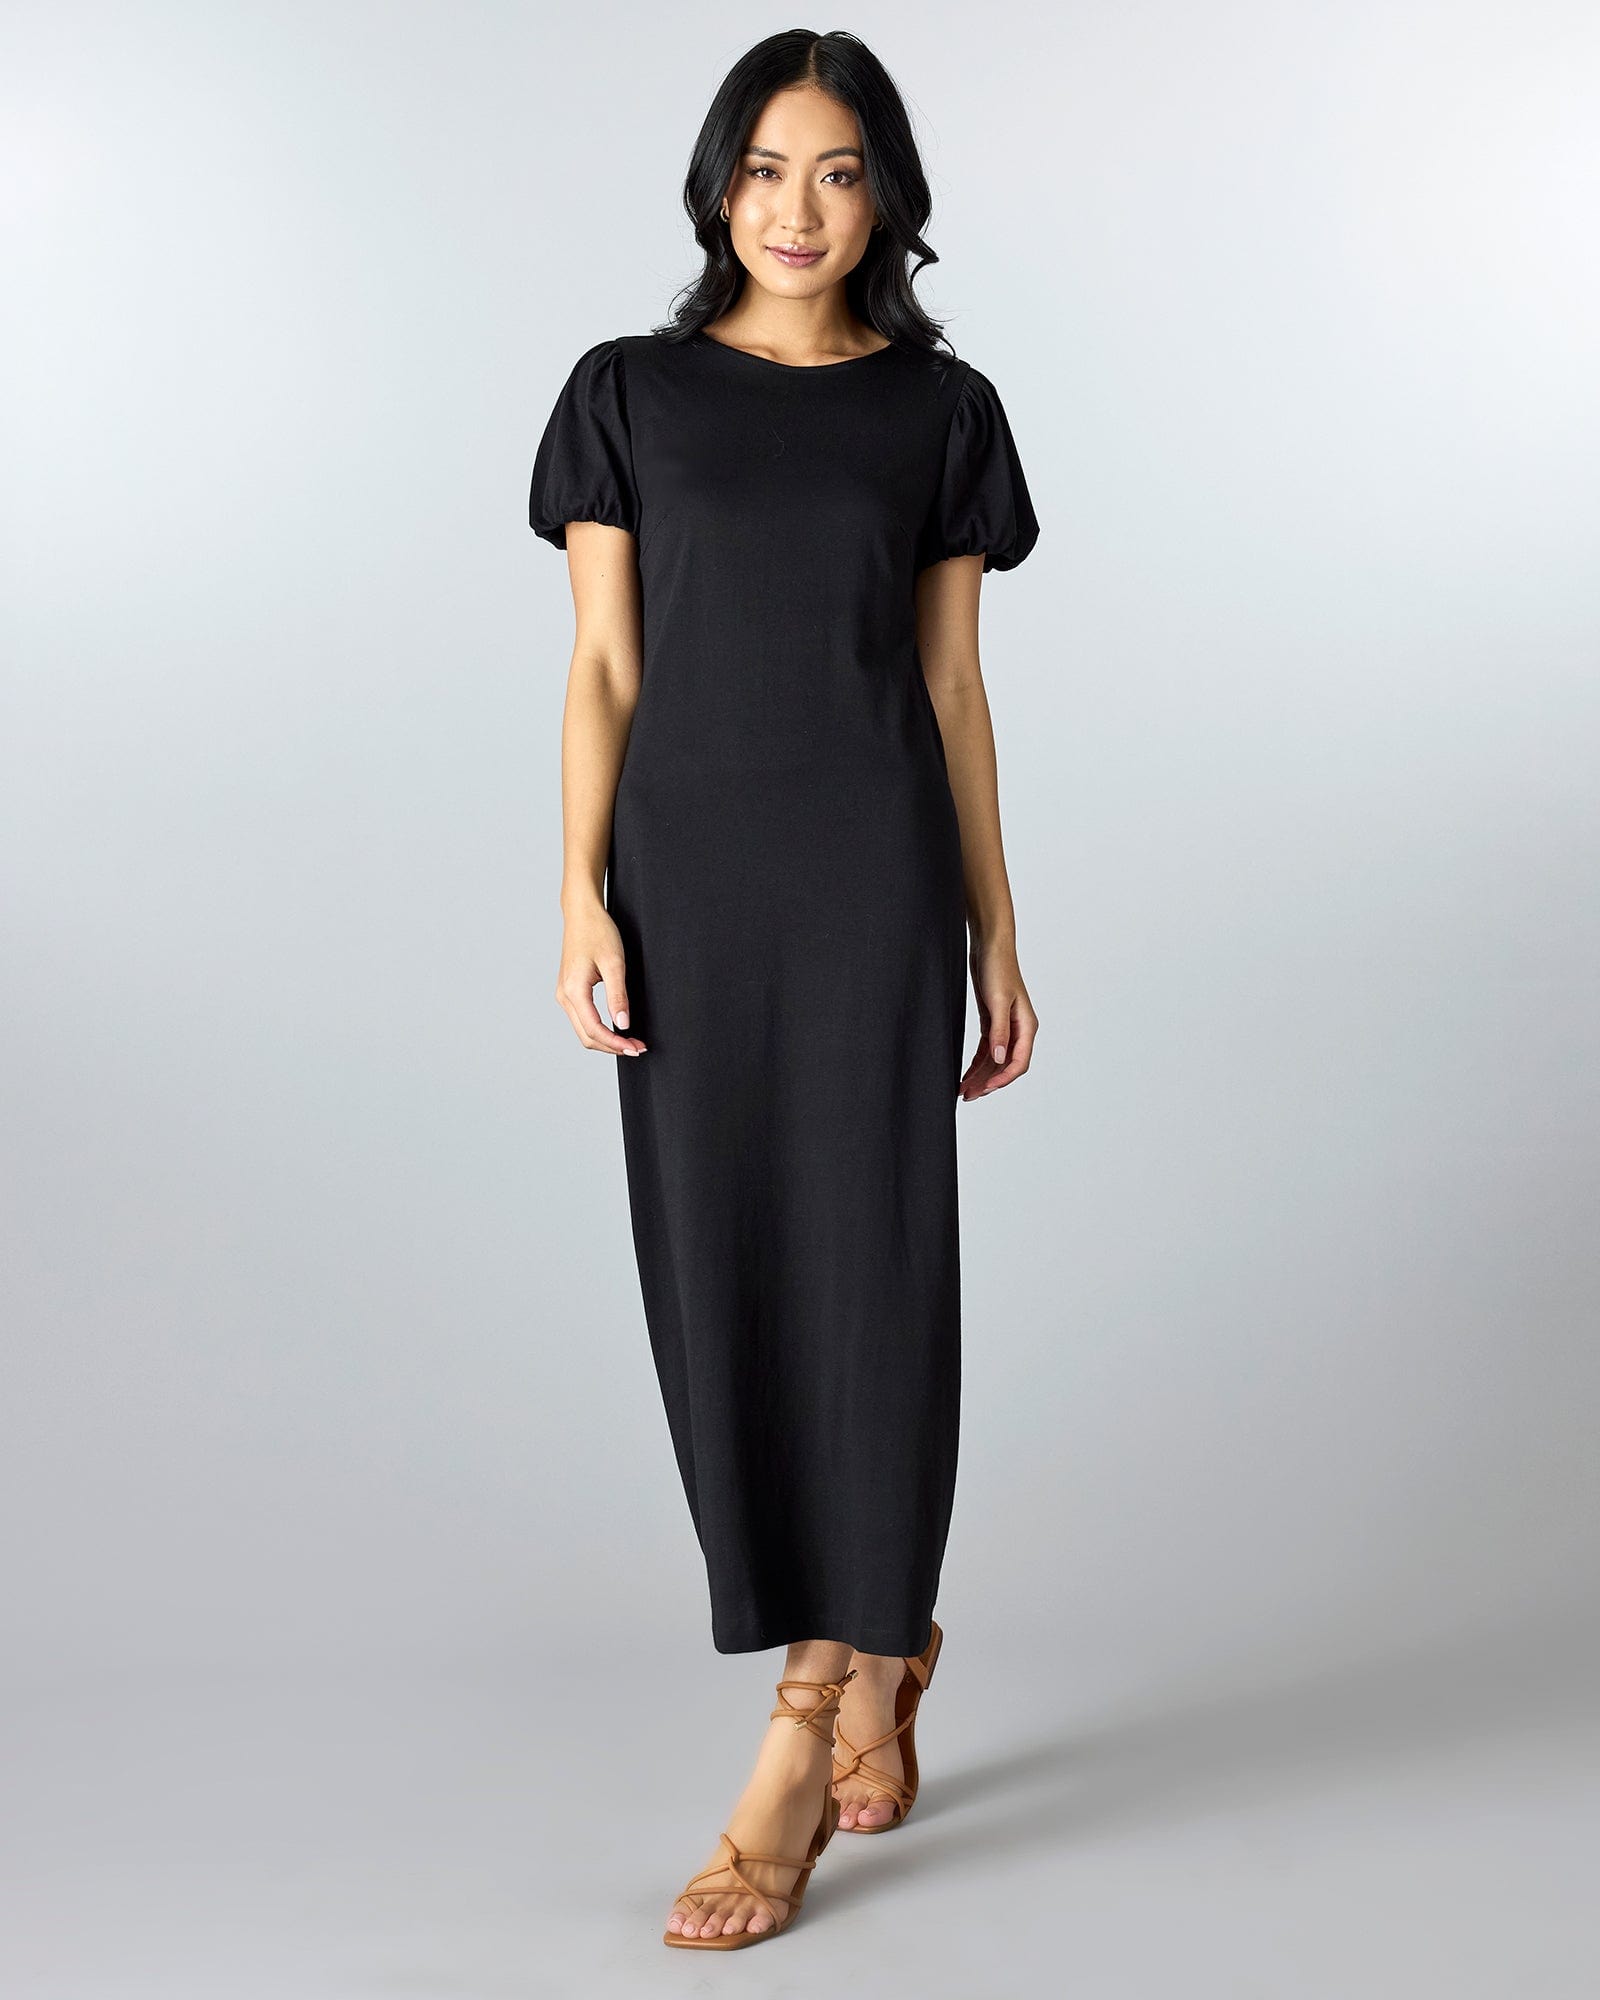 Woman in a black short sleeved, maxi sheath dress.